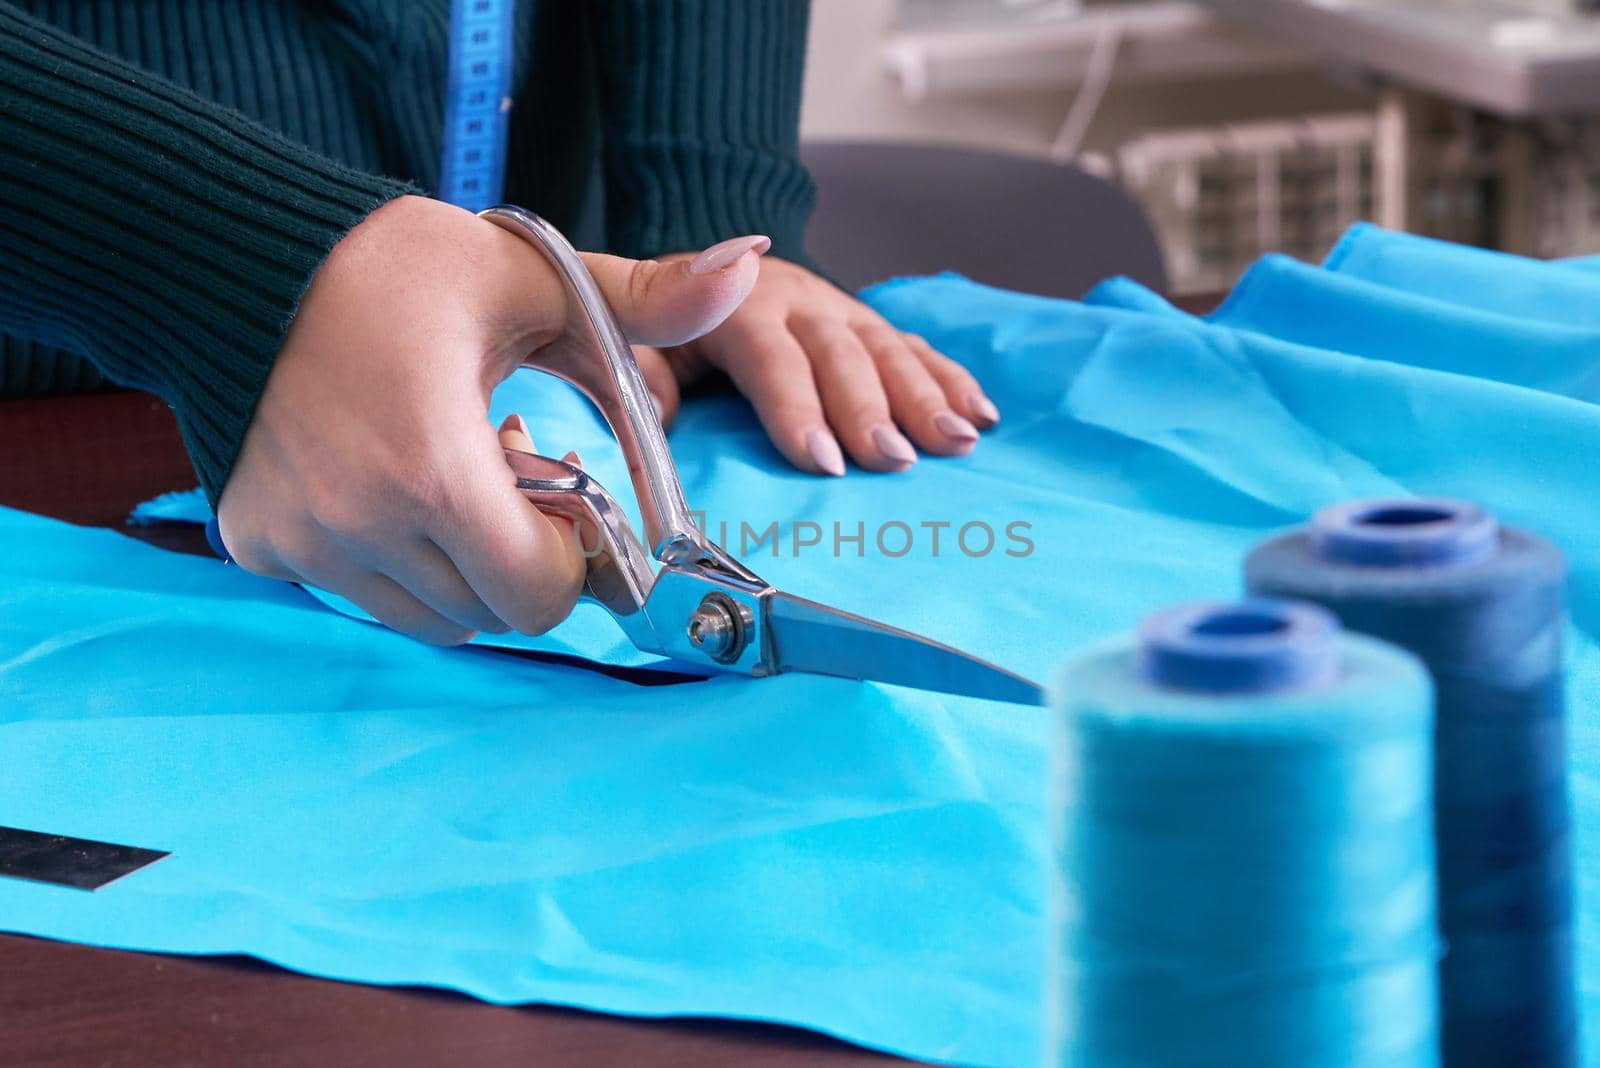 Dressmaker cutting fabric in atelier shop